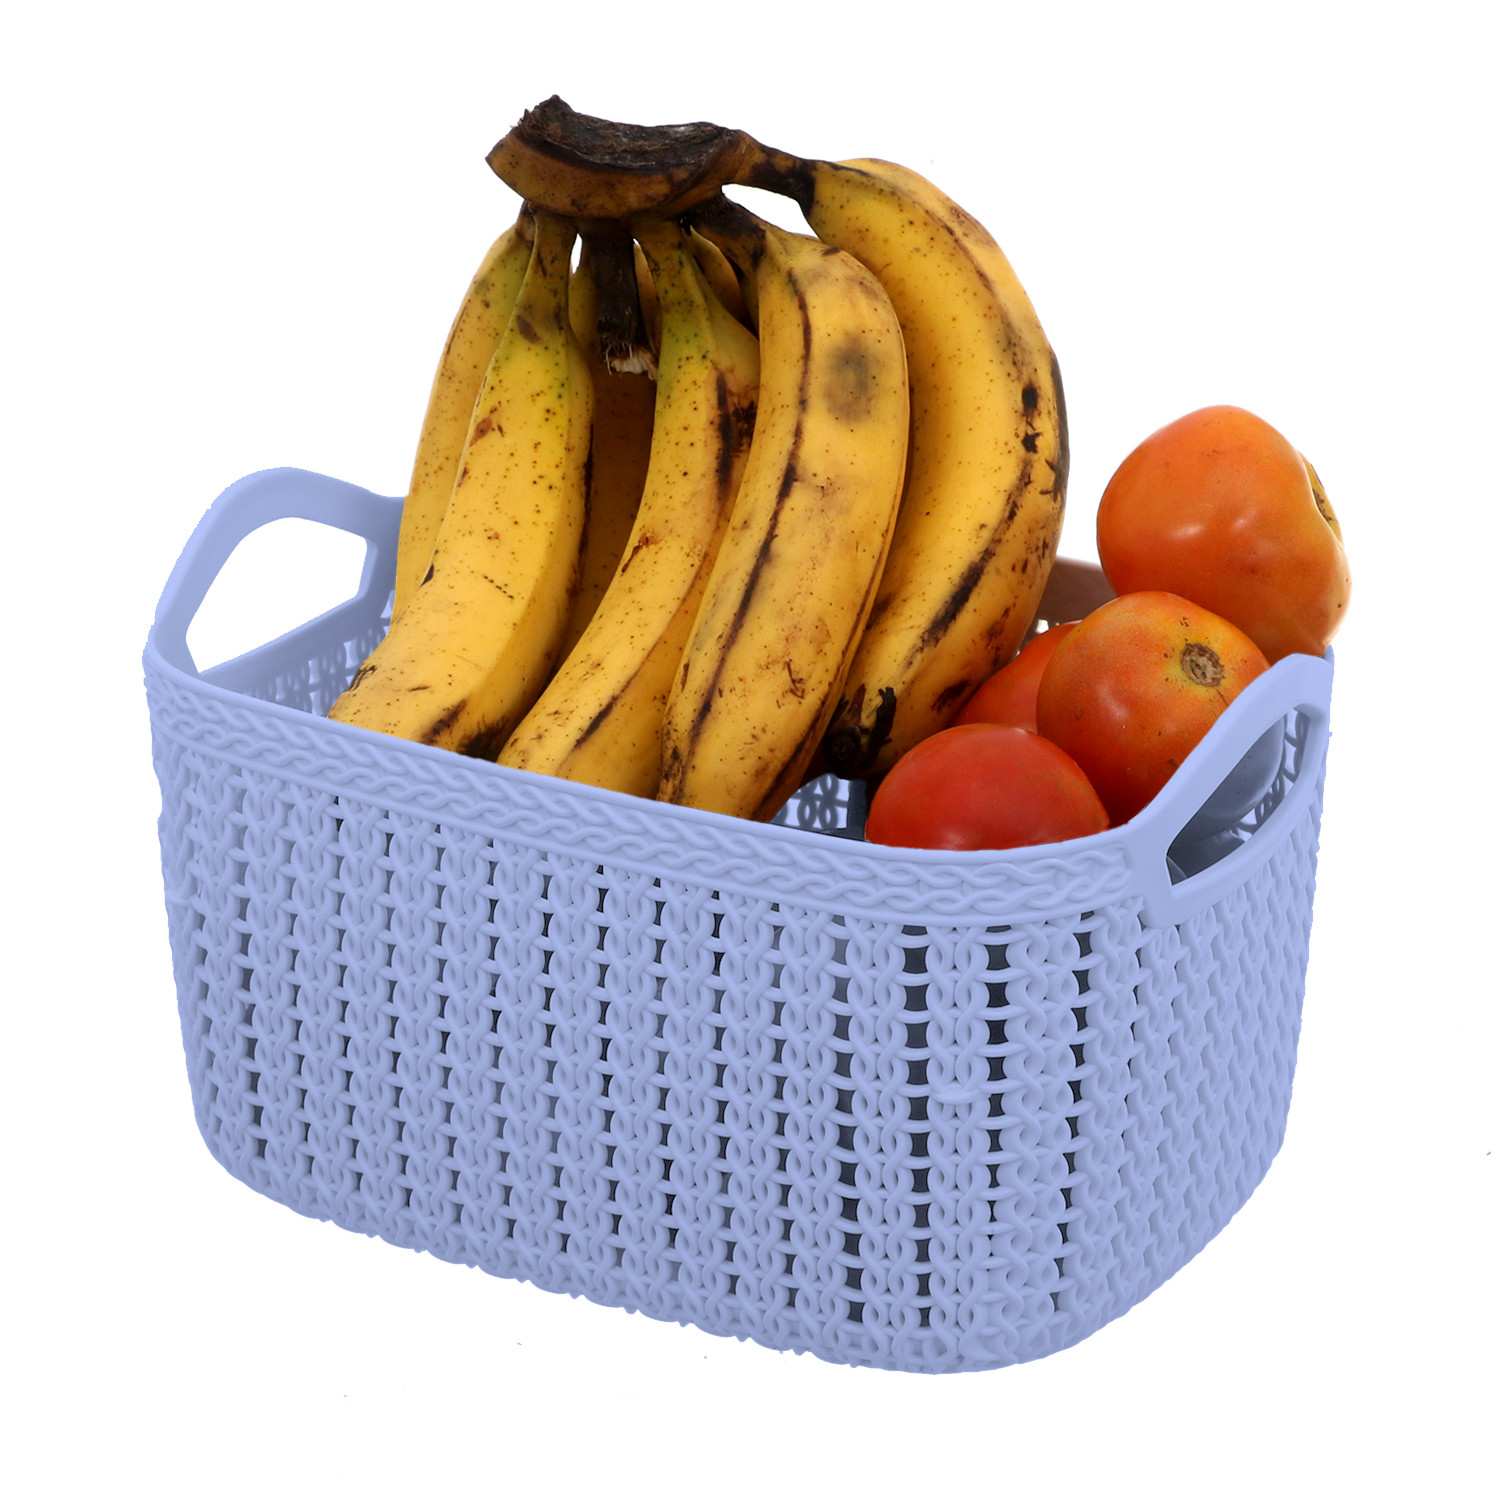 Kuber Industries Unbreakable Plastic Multipurpose Large Size Flexible Storage Baskets / Fruit Vegetable Bathroom Stationary Home Basket with Handles (Grey) -CTKTC37831